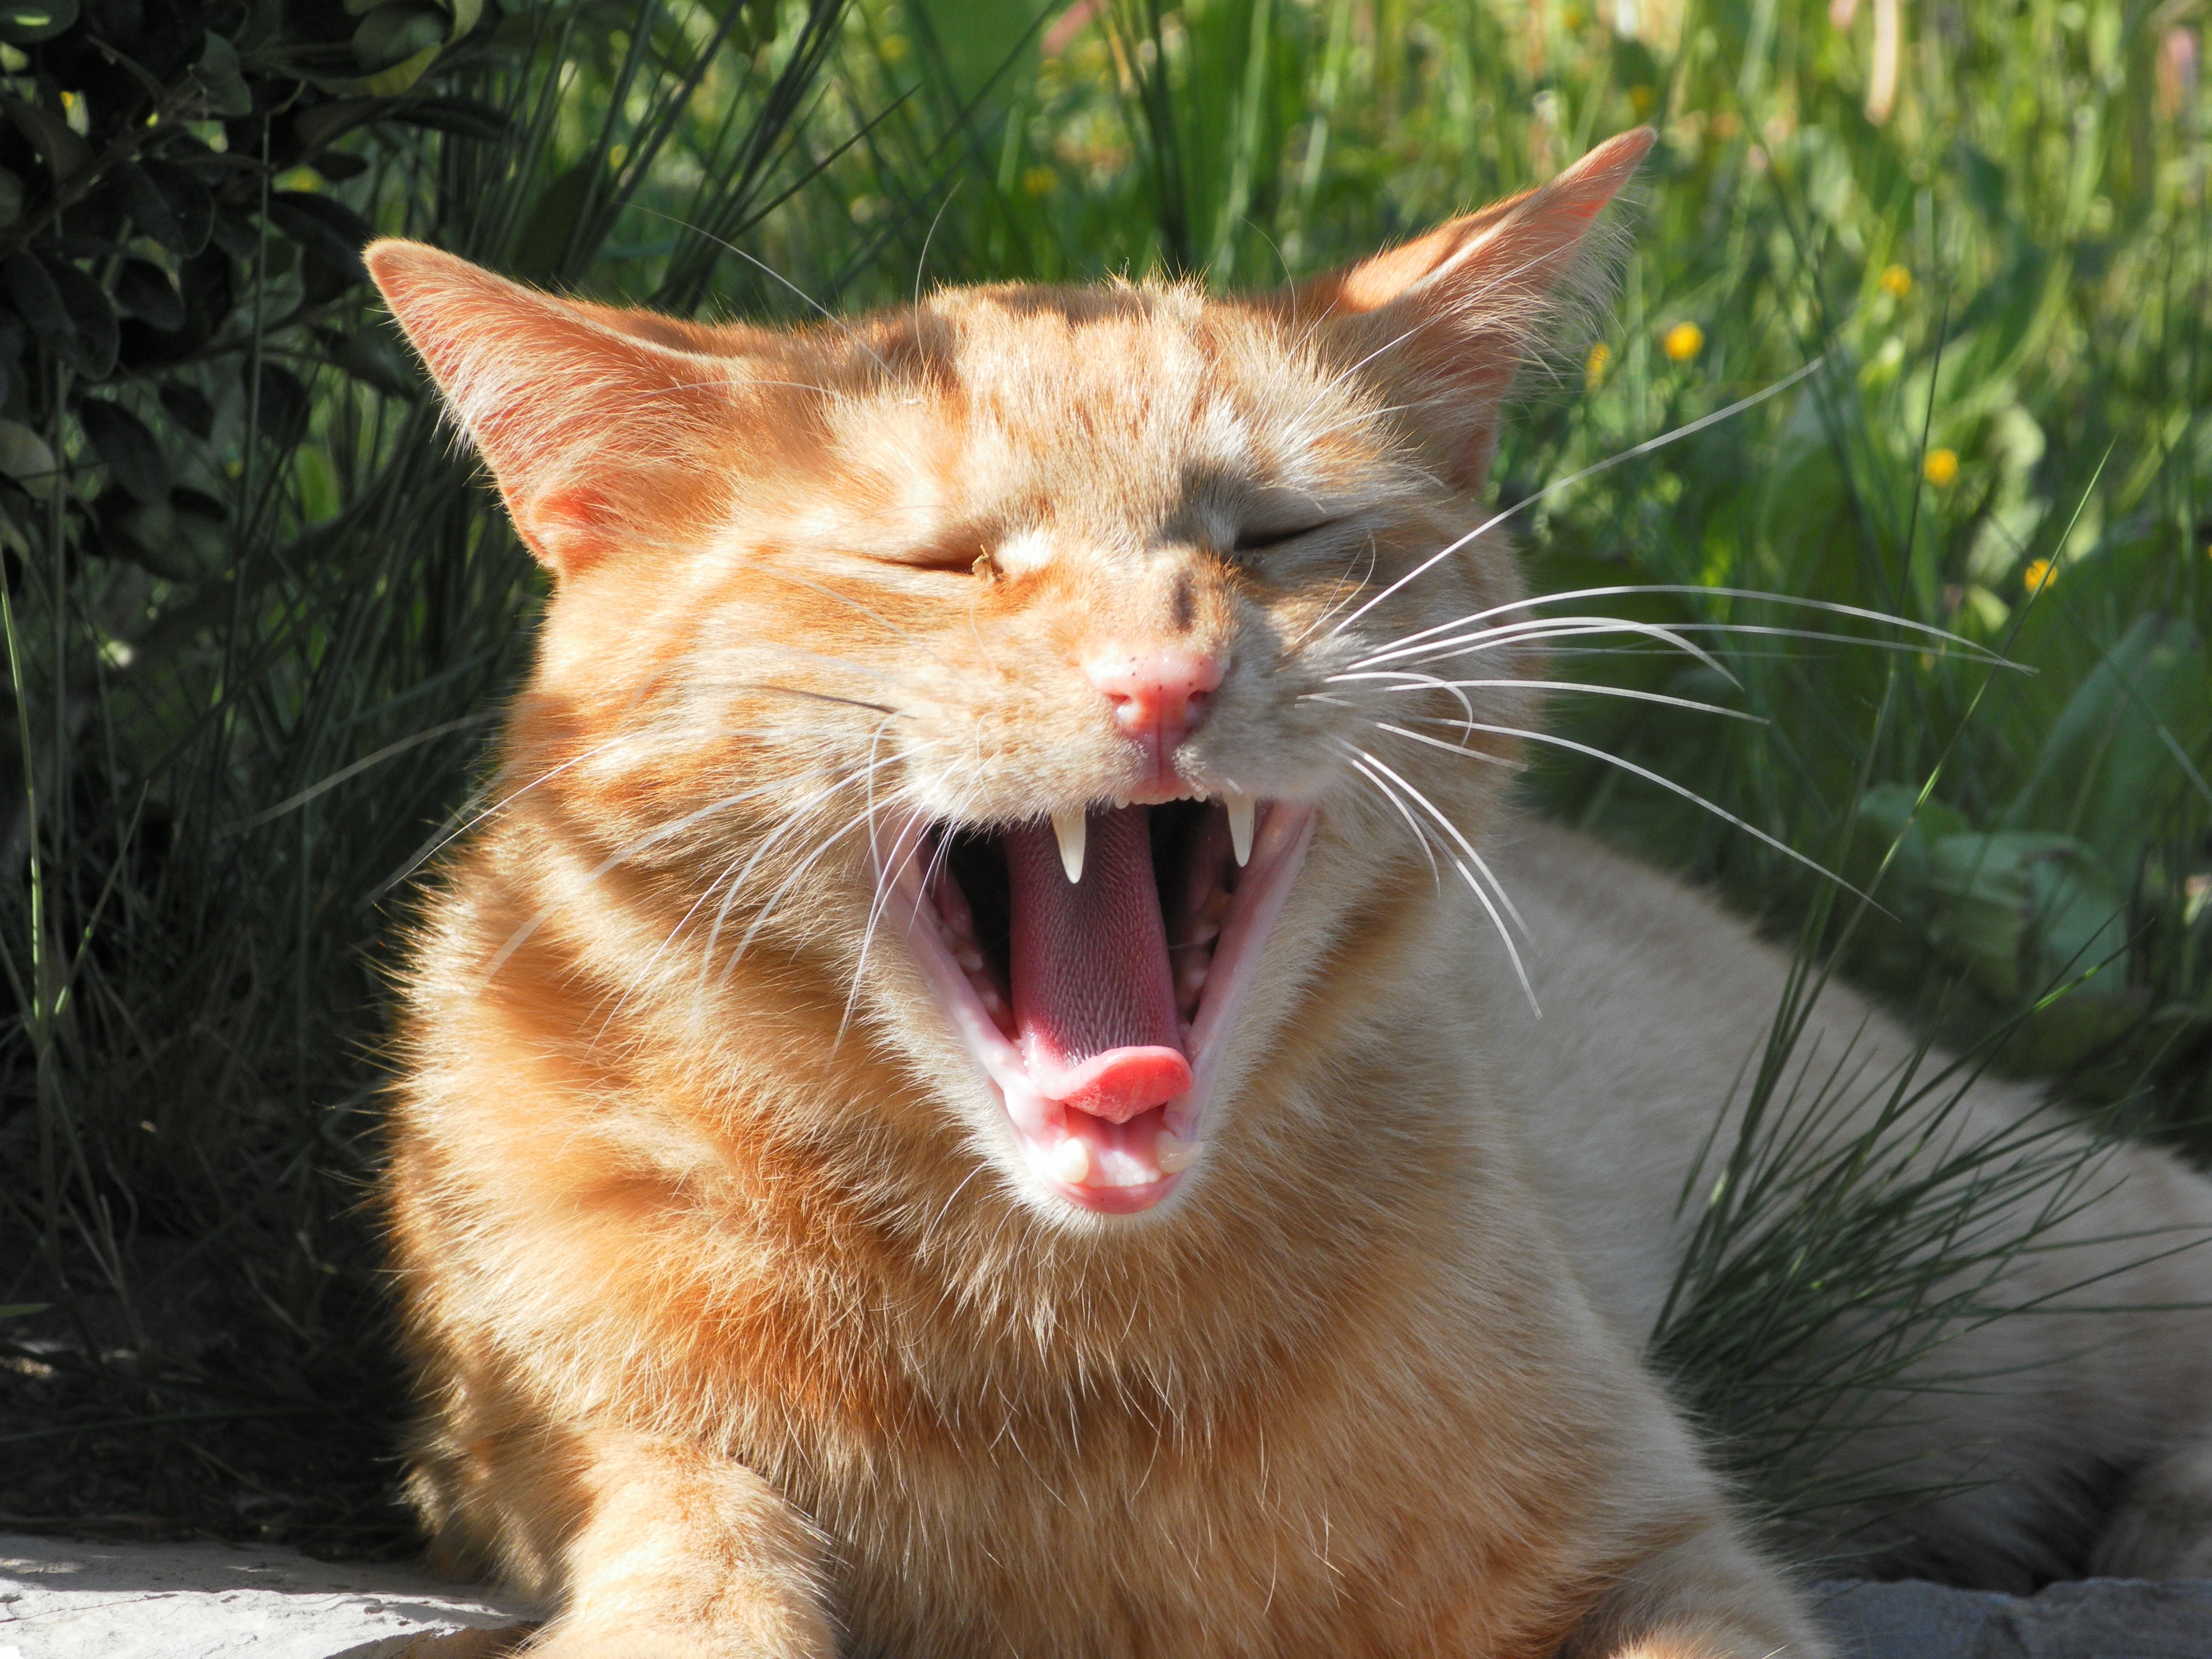 Ginger Fur, Animal, Teeth, Yawn, Cat, domestic cat, one animal